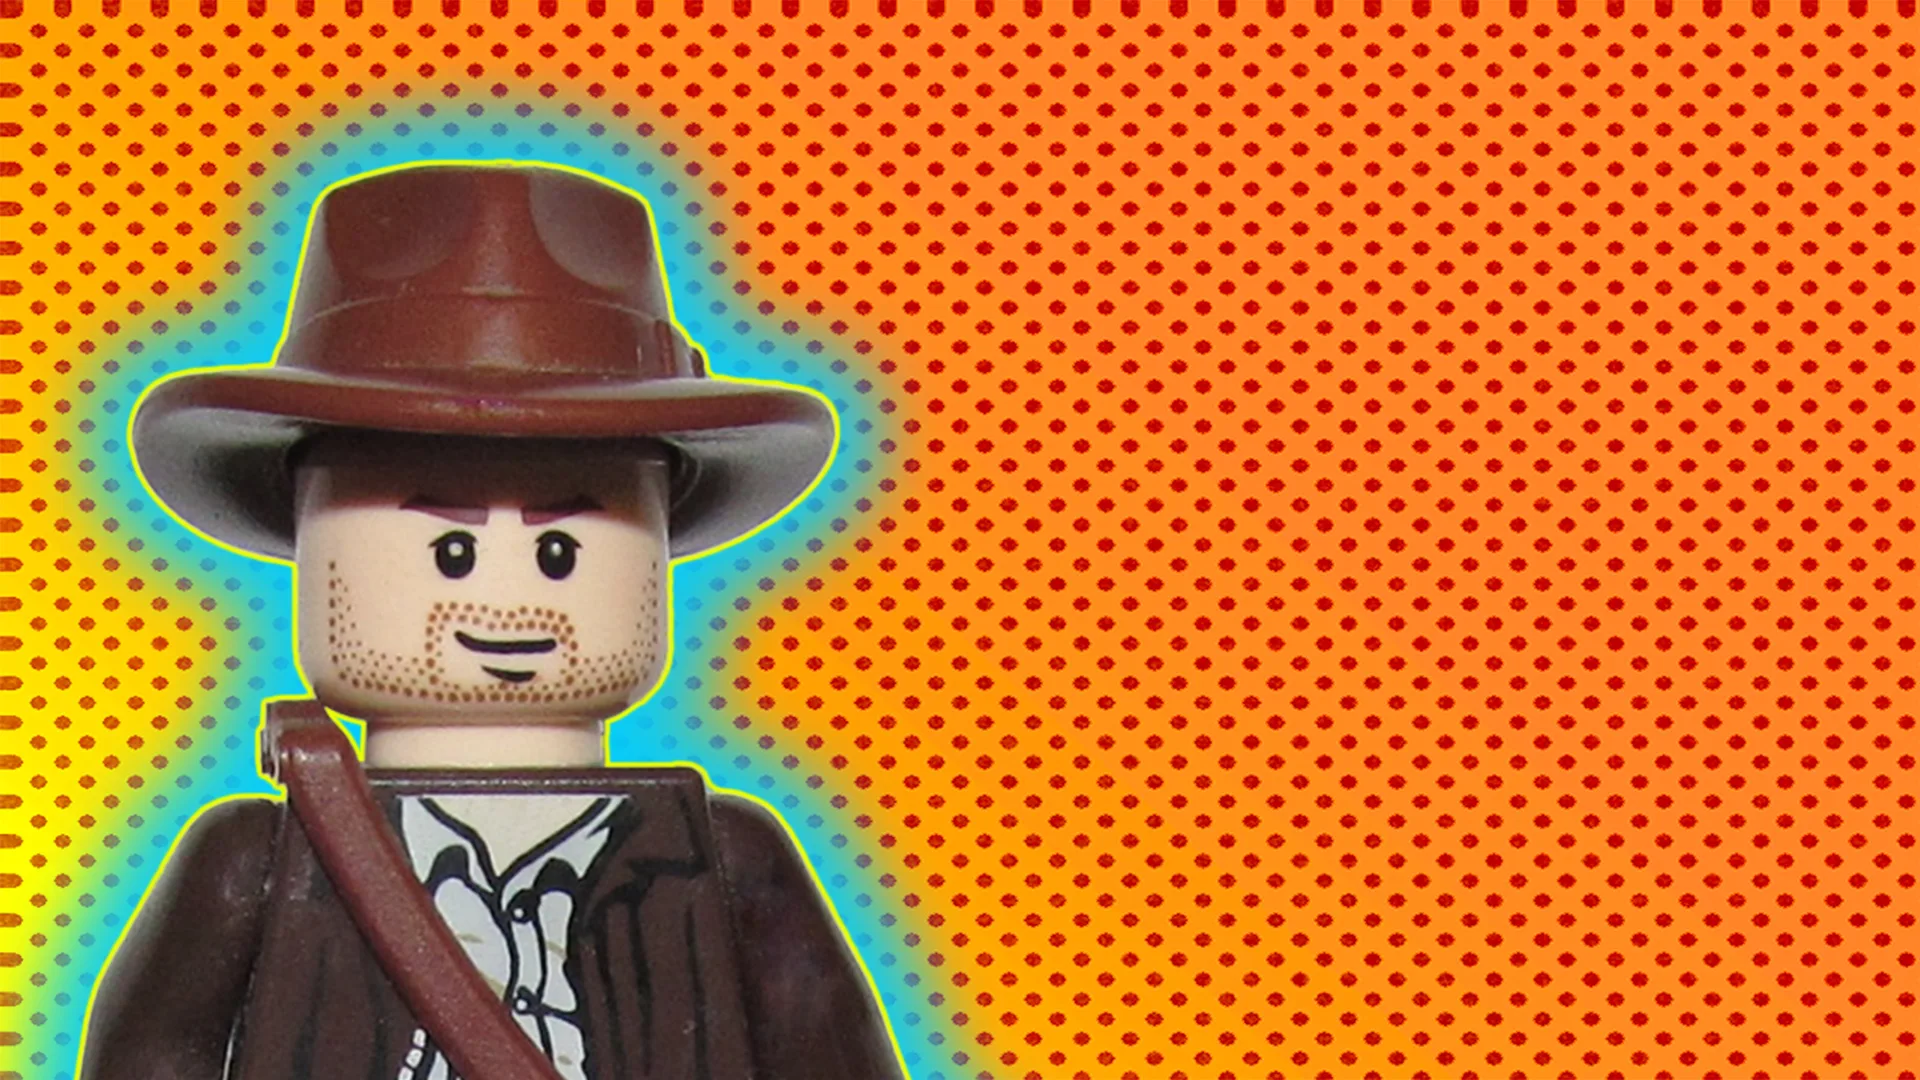 LEGO Indiana Jones - in graphic house style